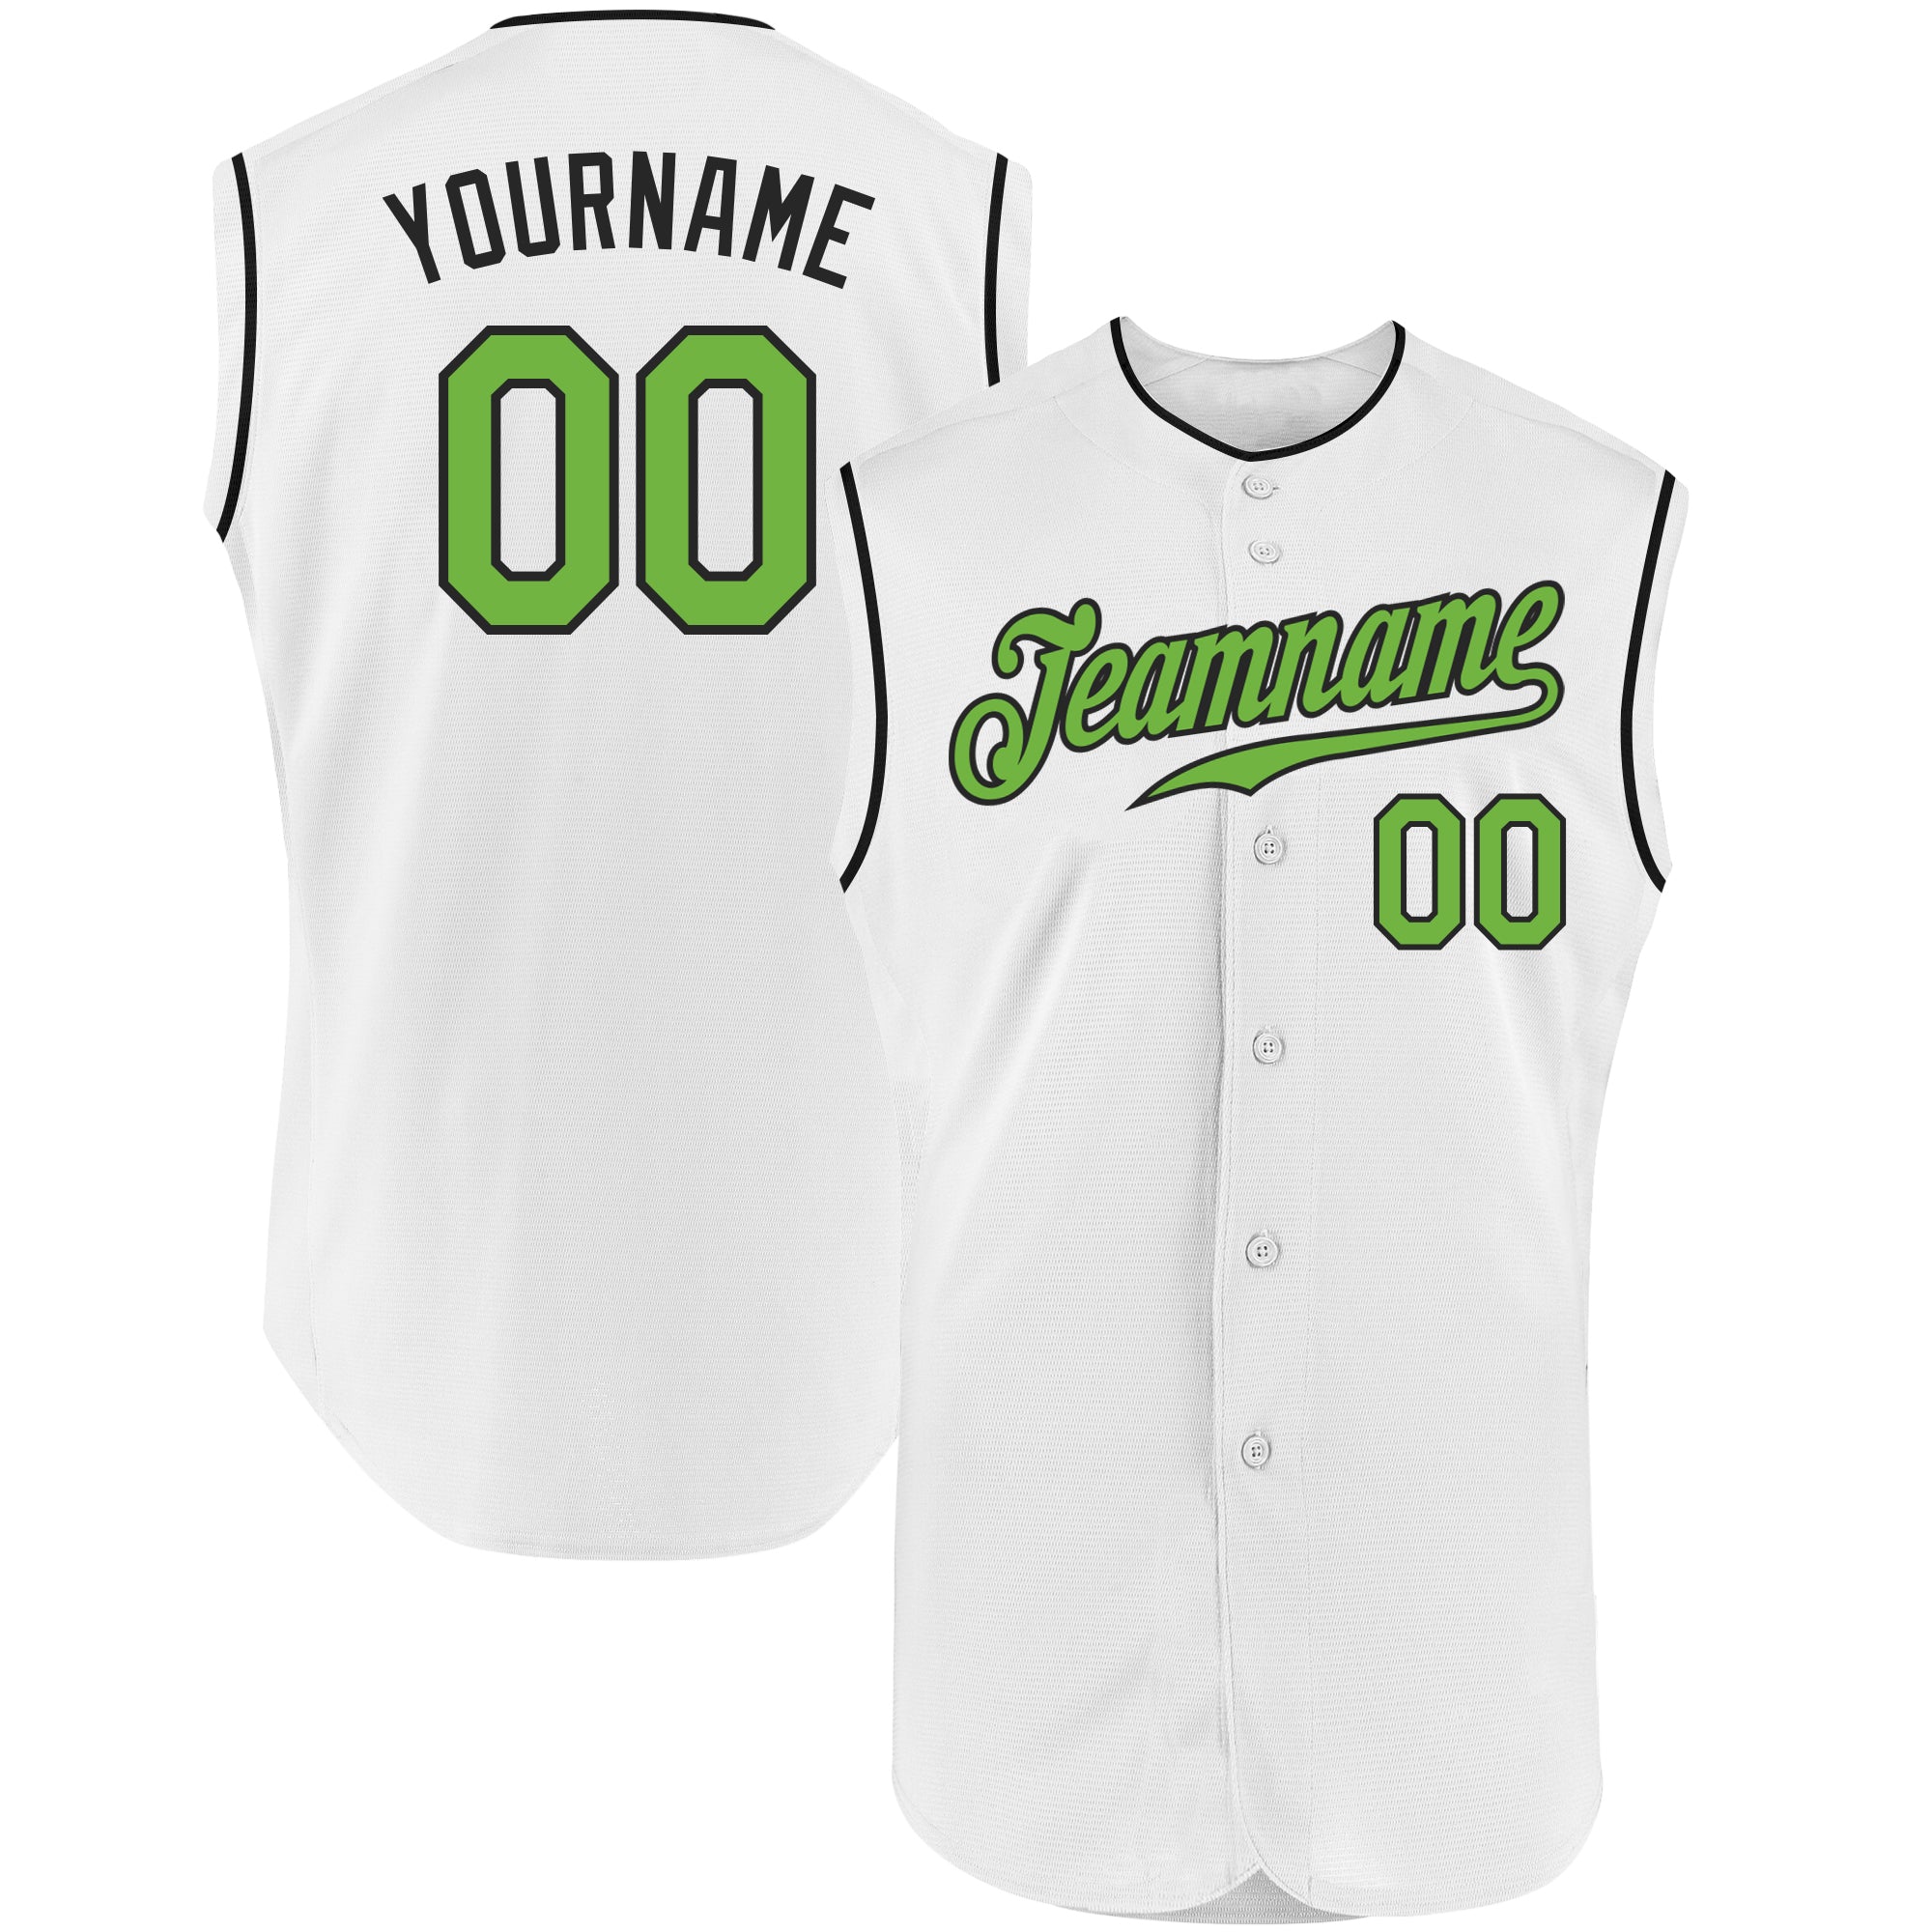 Custom White Neon Green-Black Authentic Sleeveless Baseball Jersey